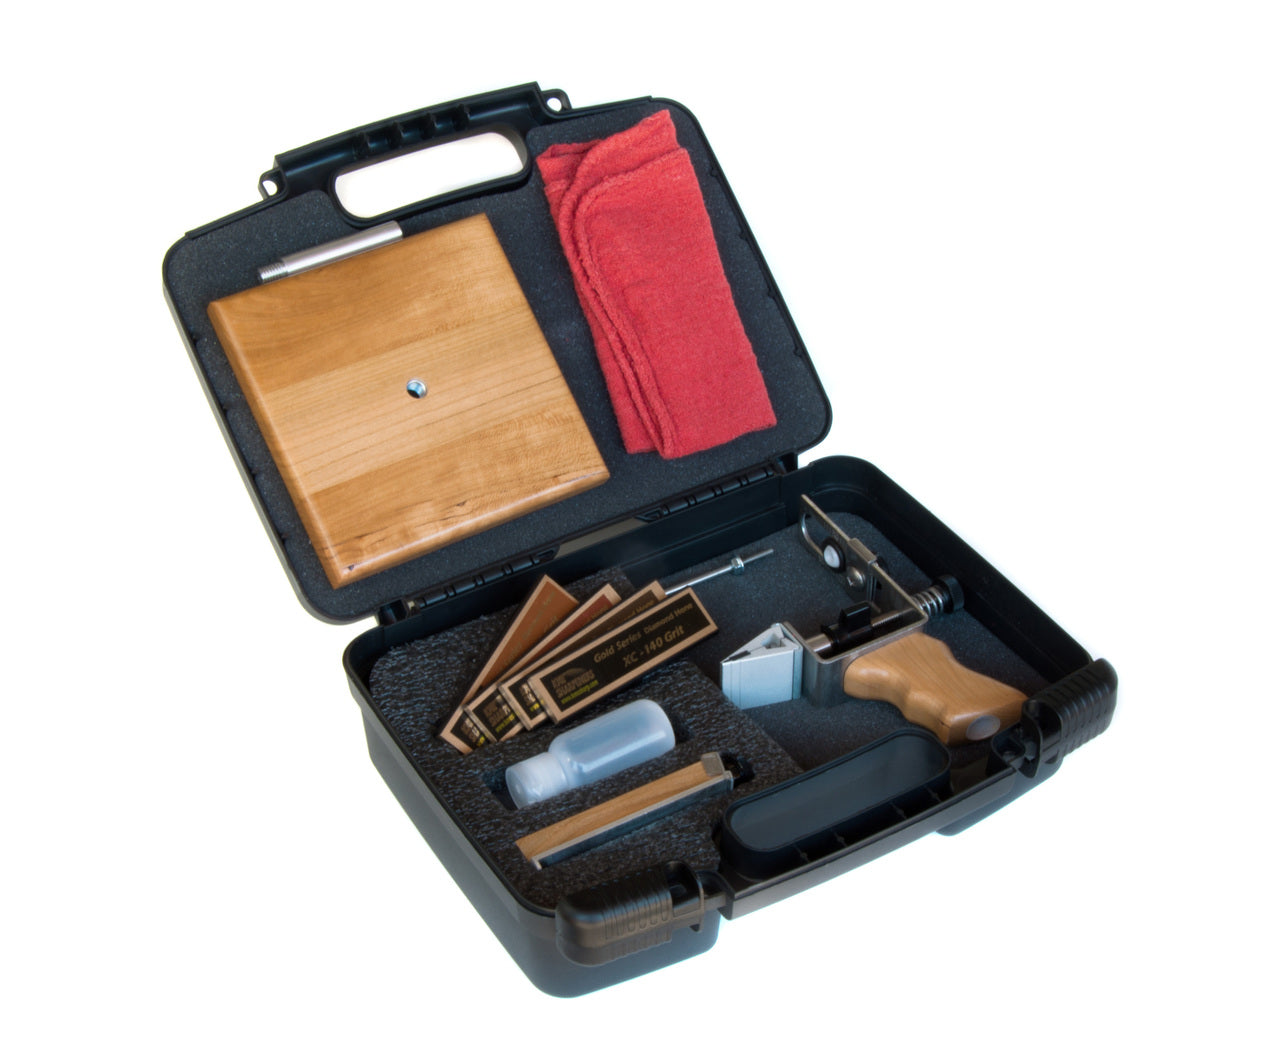  KME RPSH Combo Kit Knife Sharpener - with Base : Tools & Home  Improvement